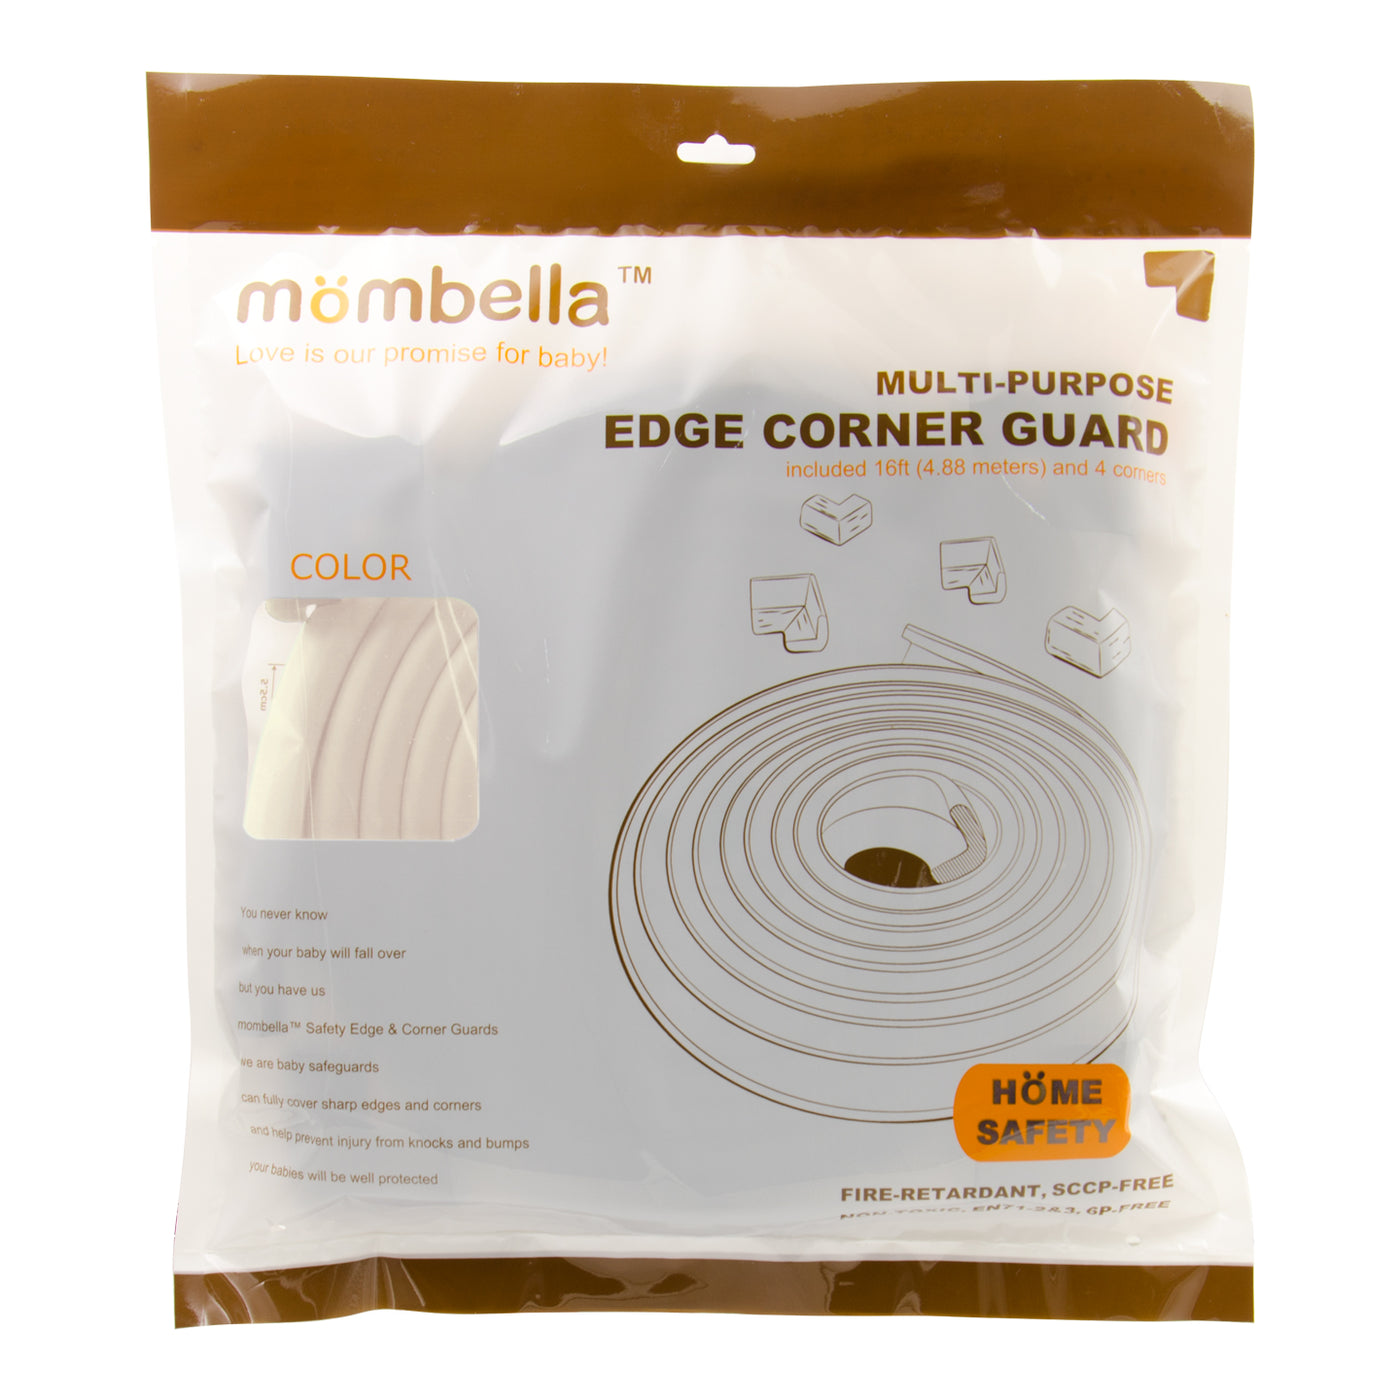 MOMBELLA Multi-purpose edge corner guard 16ft and 4 corners Home safety Ivory Color - mombella